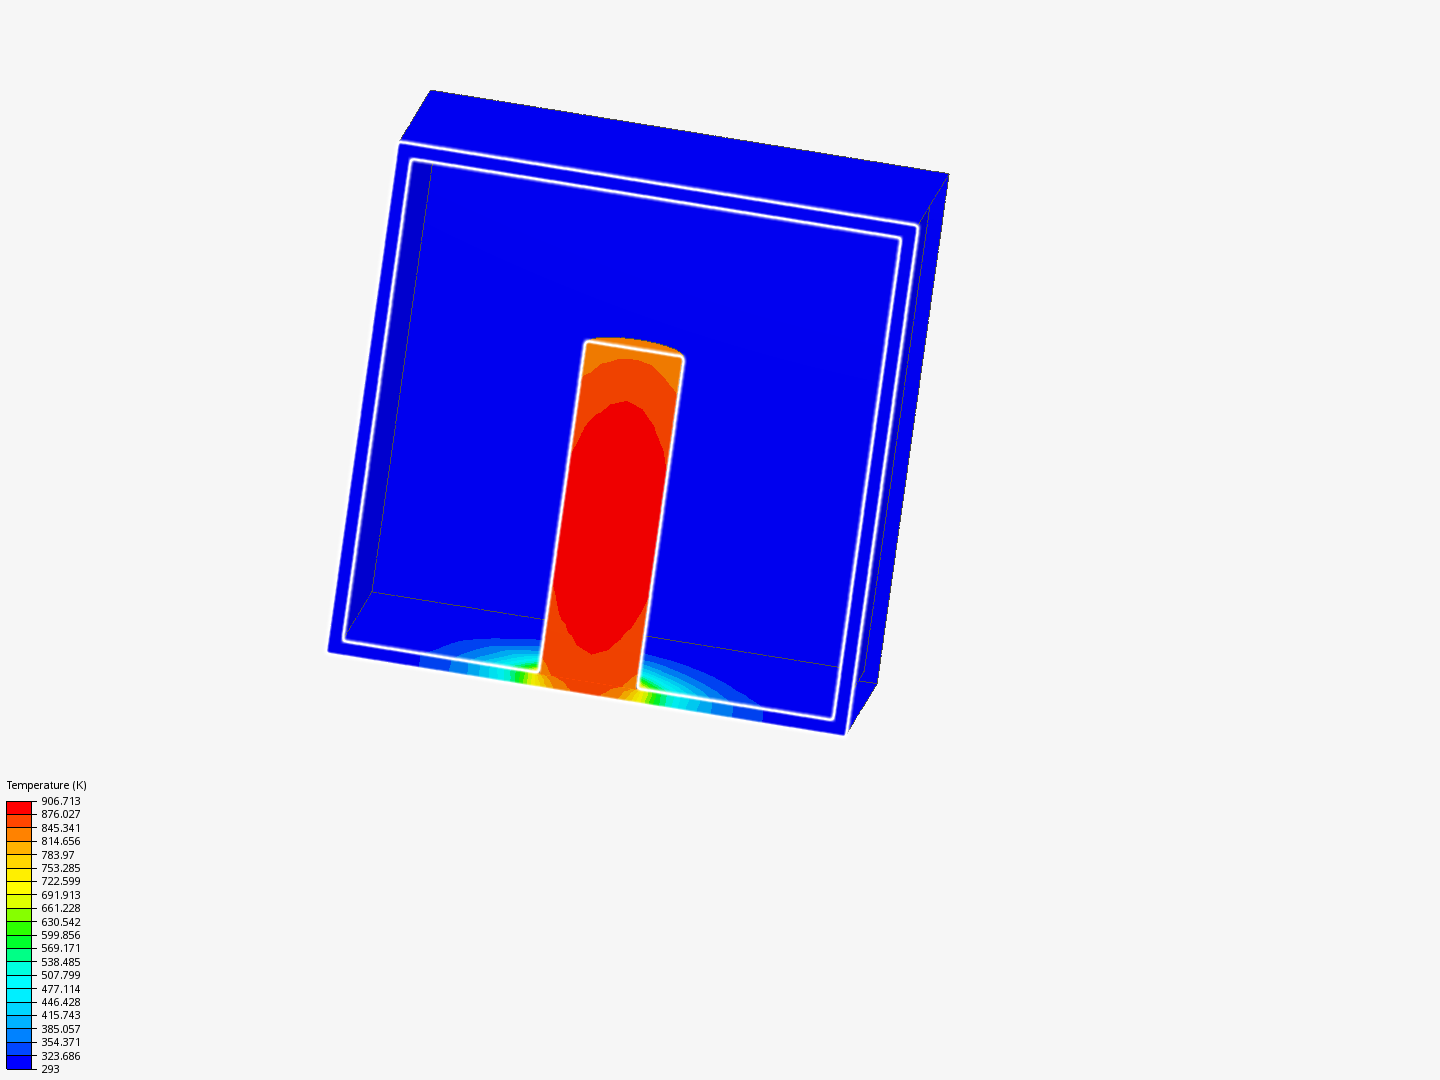 Battery test simulation image